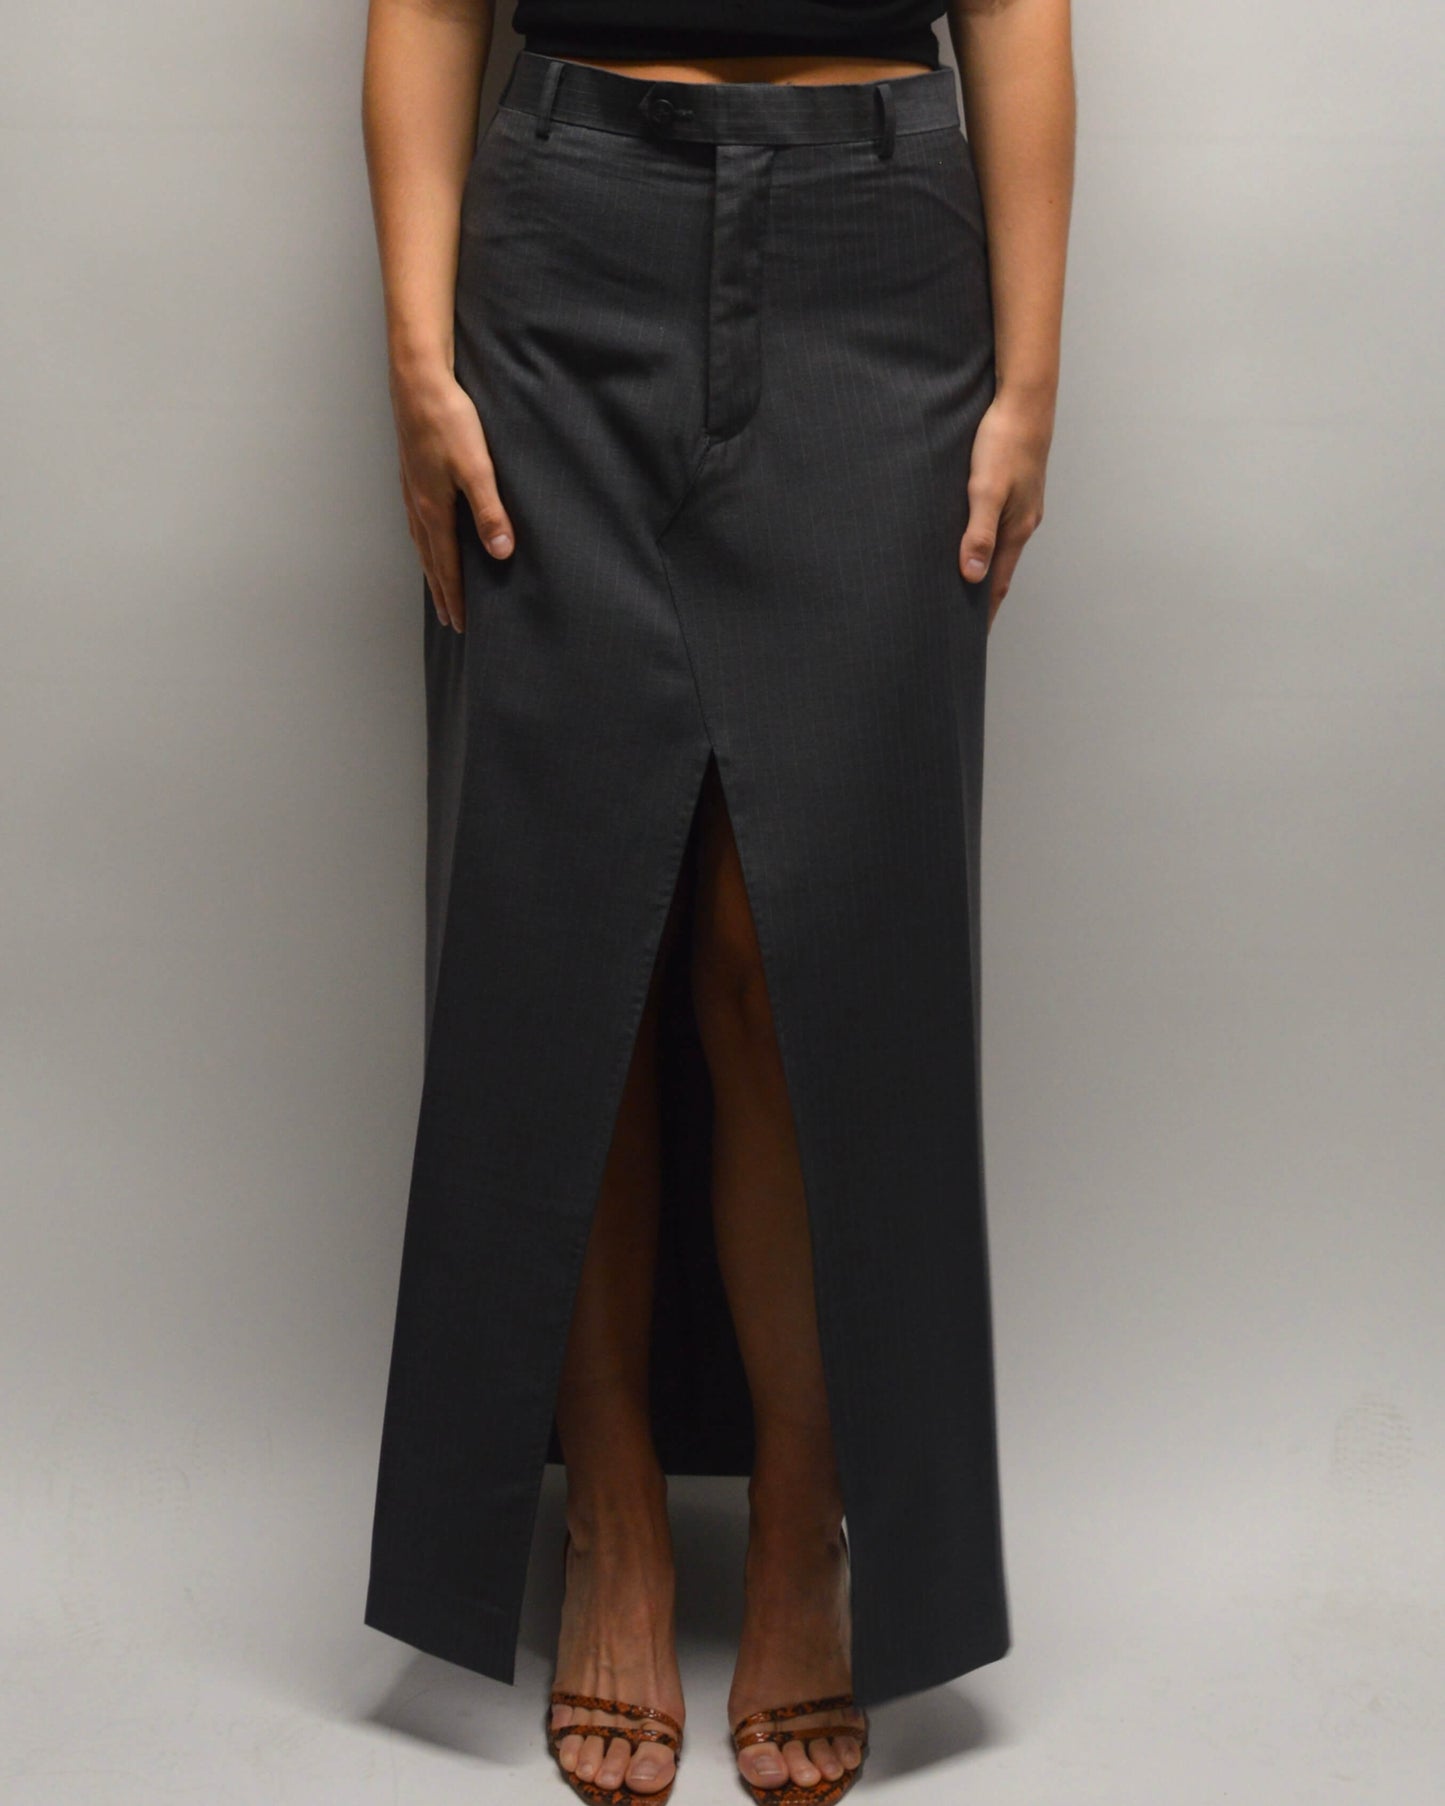 Vegan Skirt Suit - Business Perfection (S/M)